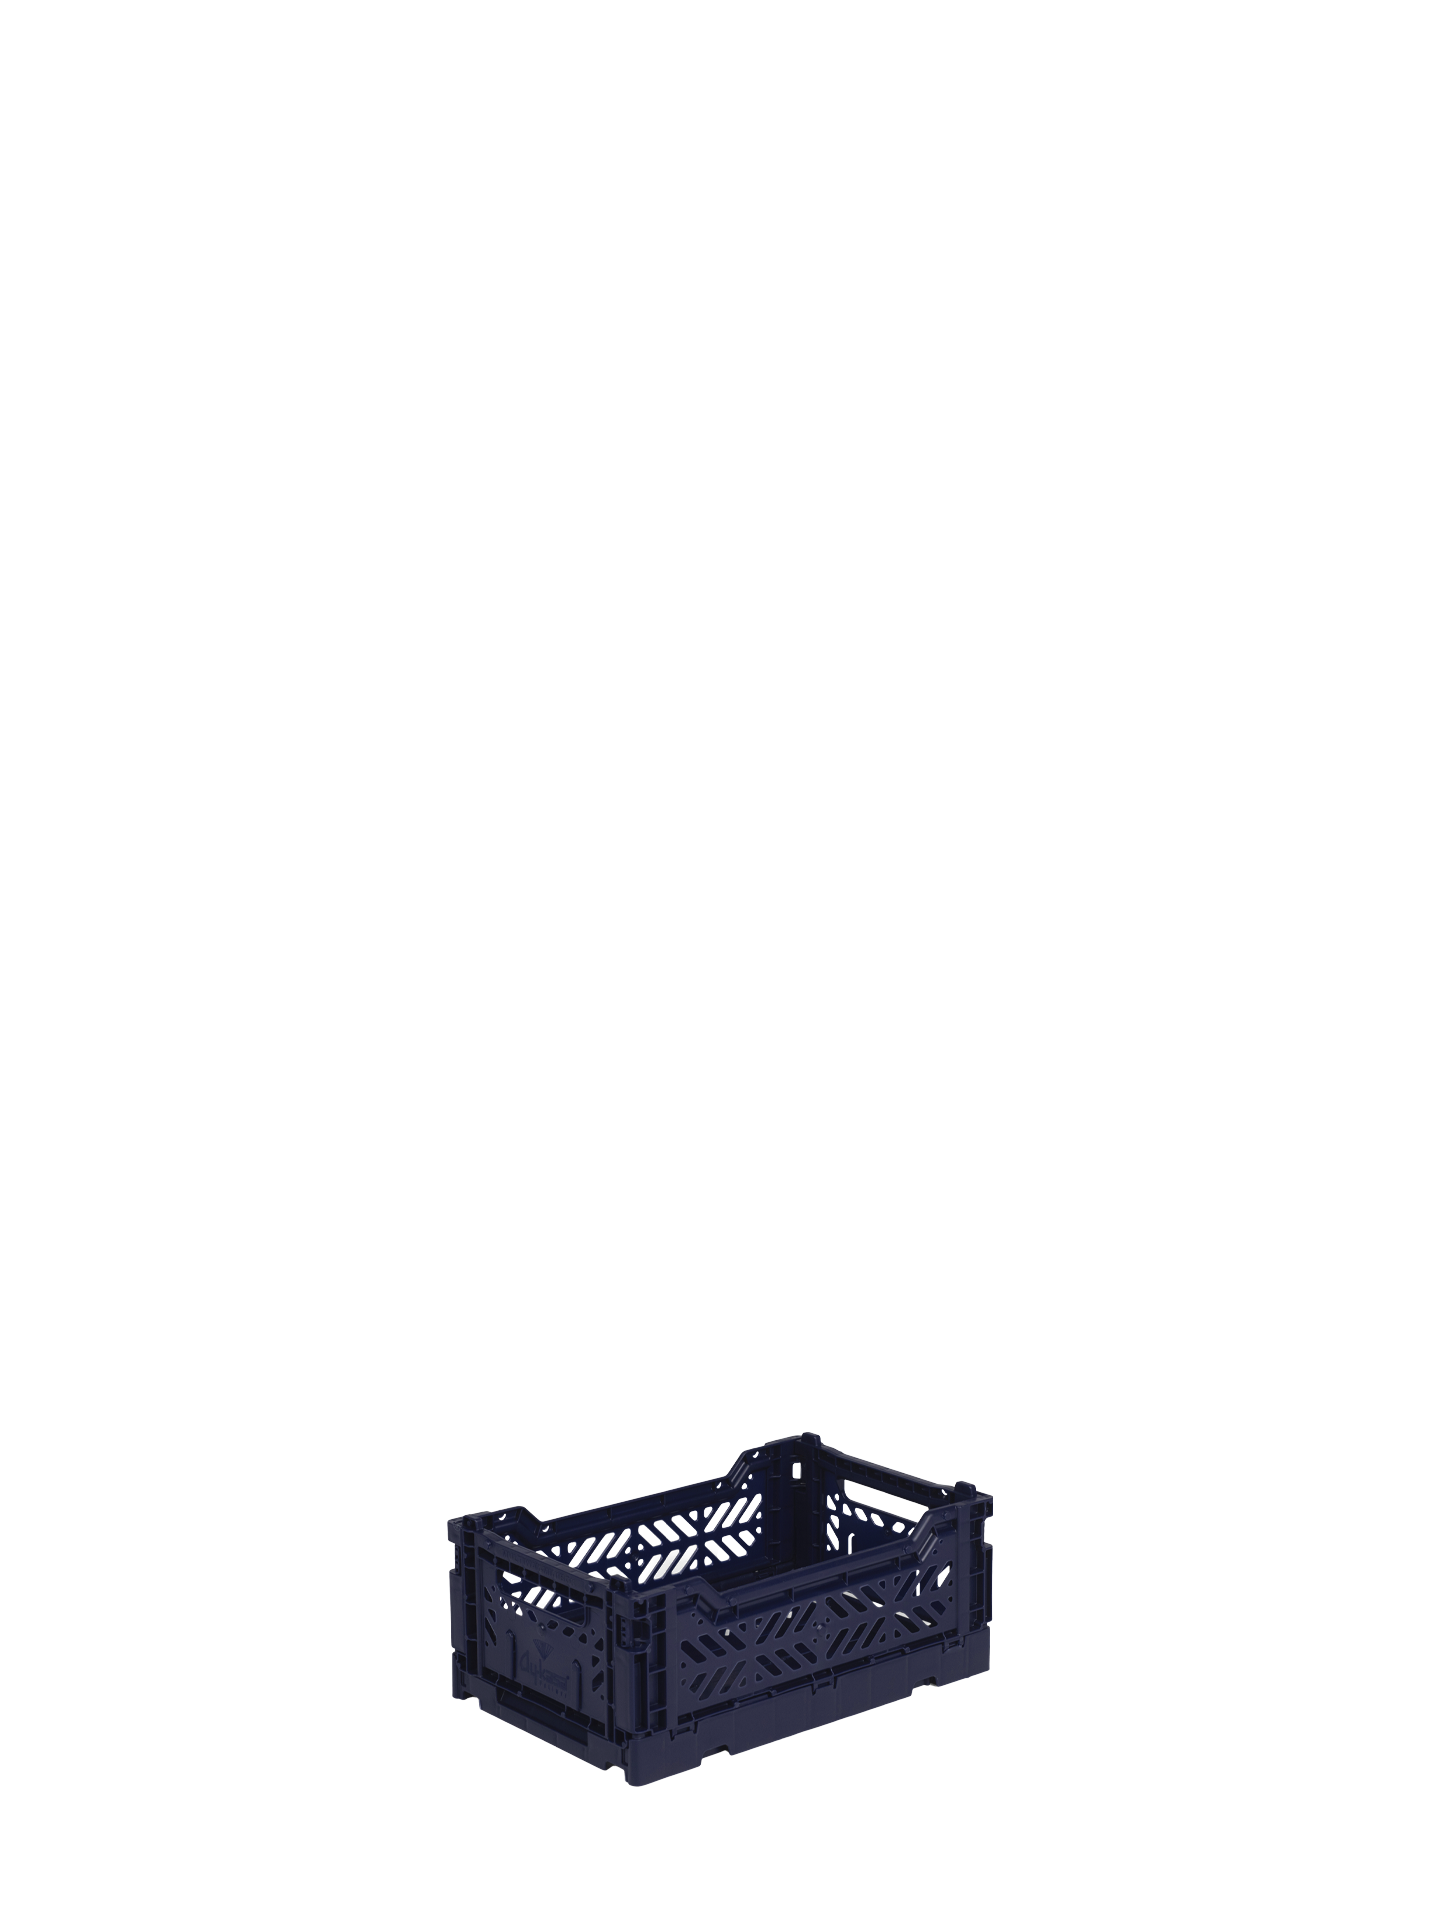 Mini Aykasa crate in dark navy blue stacks and folds